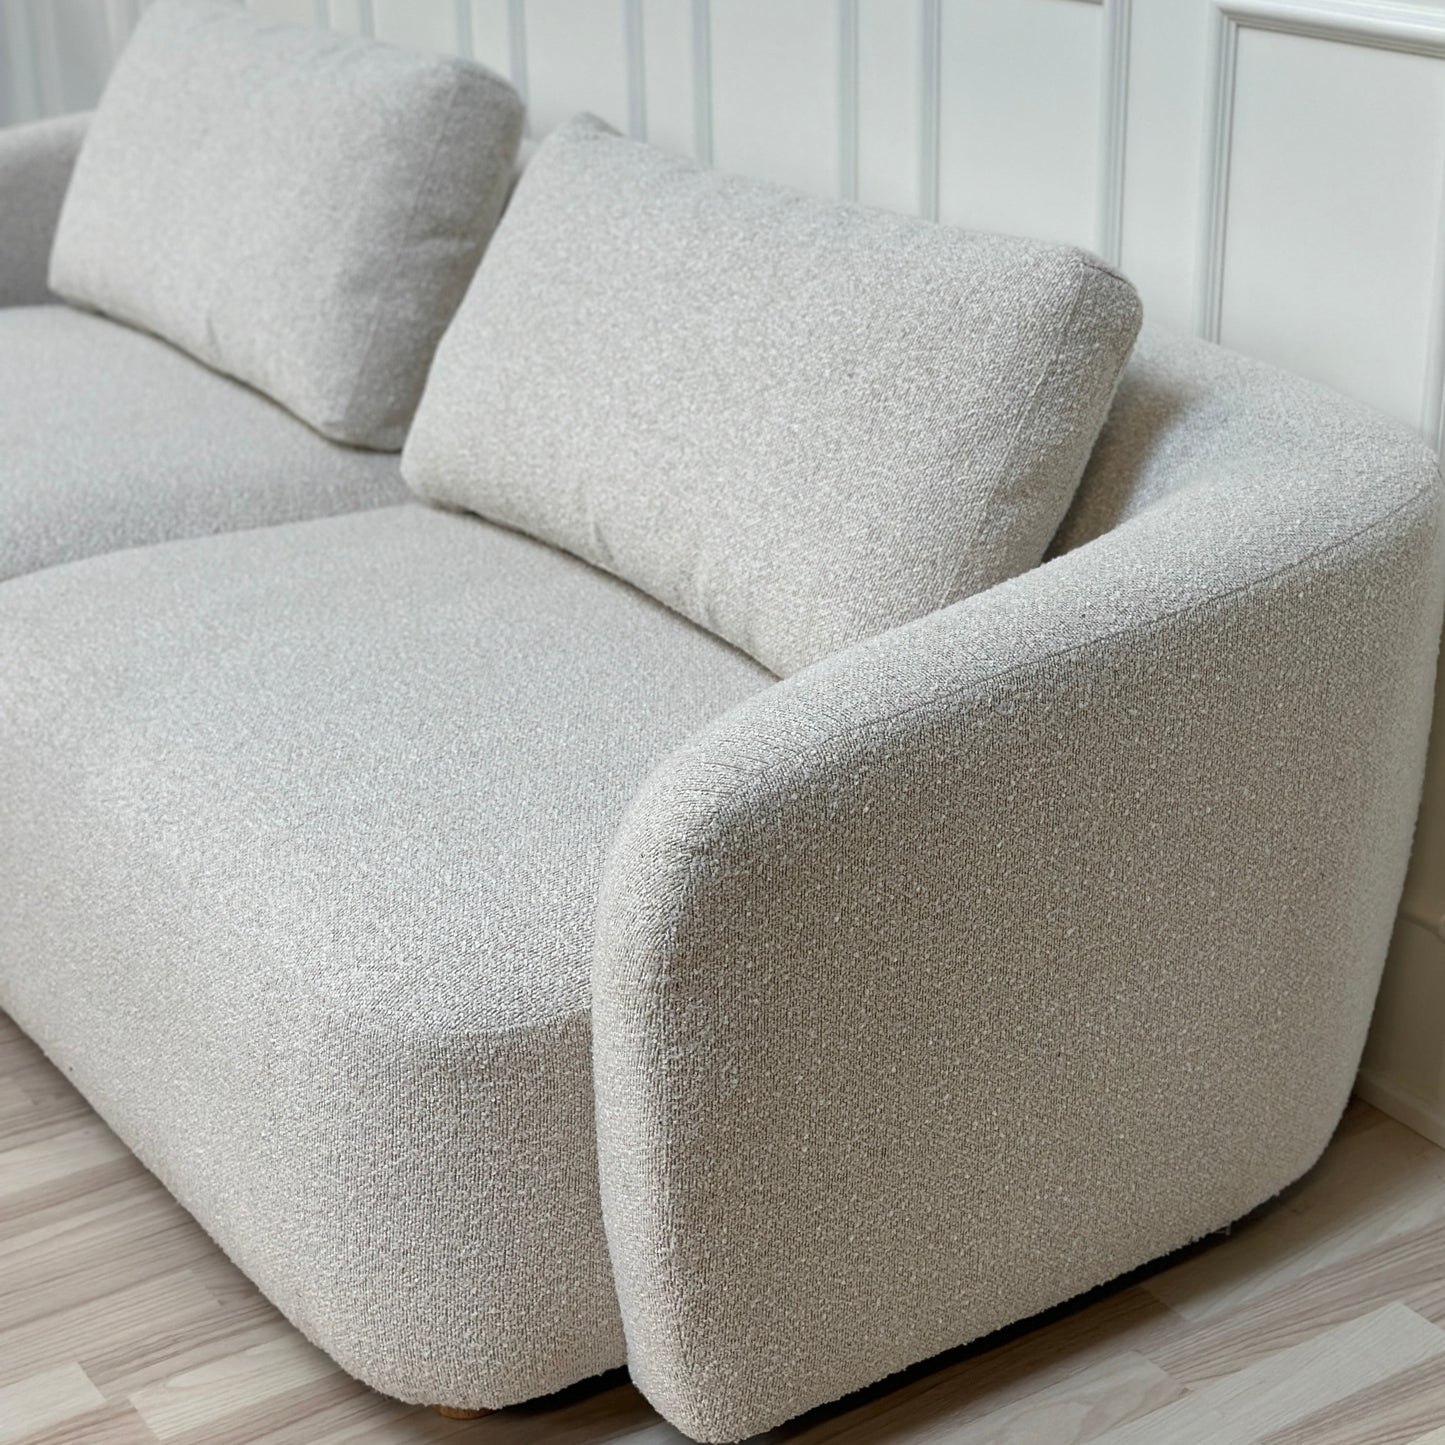 Werenberg | Stephanie sofa - 2 moduler